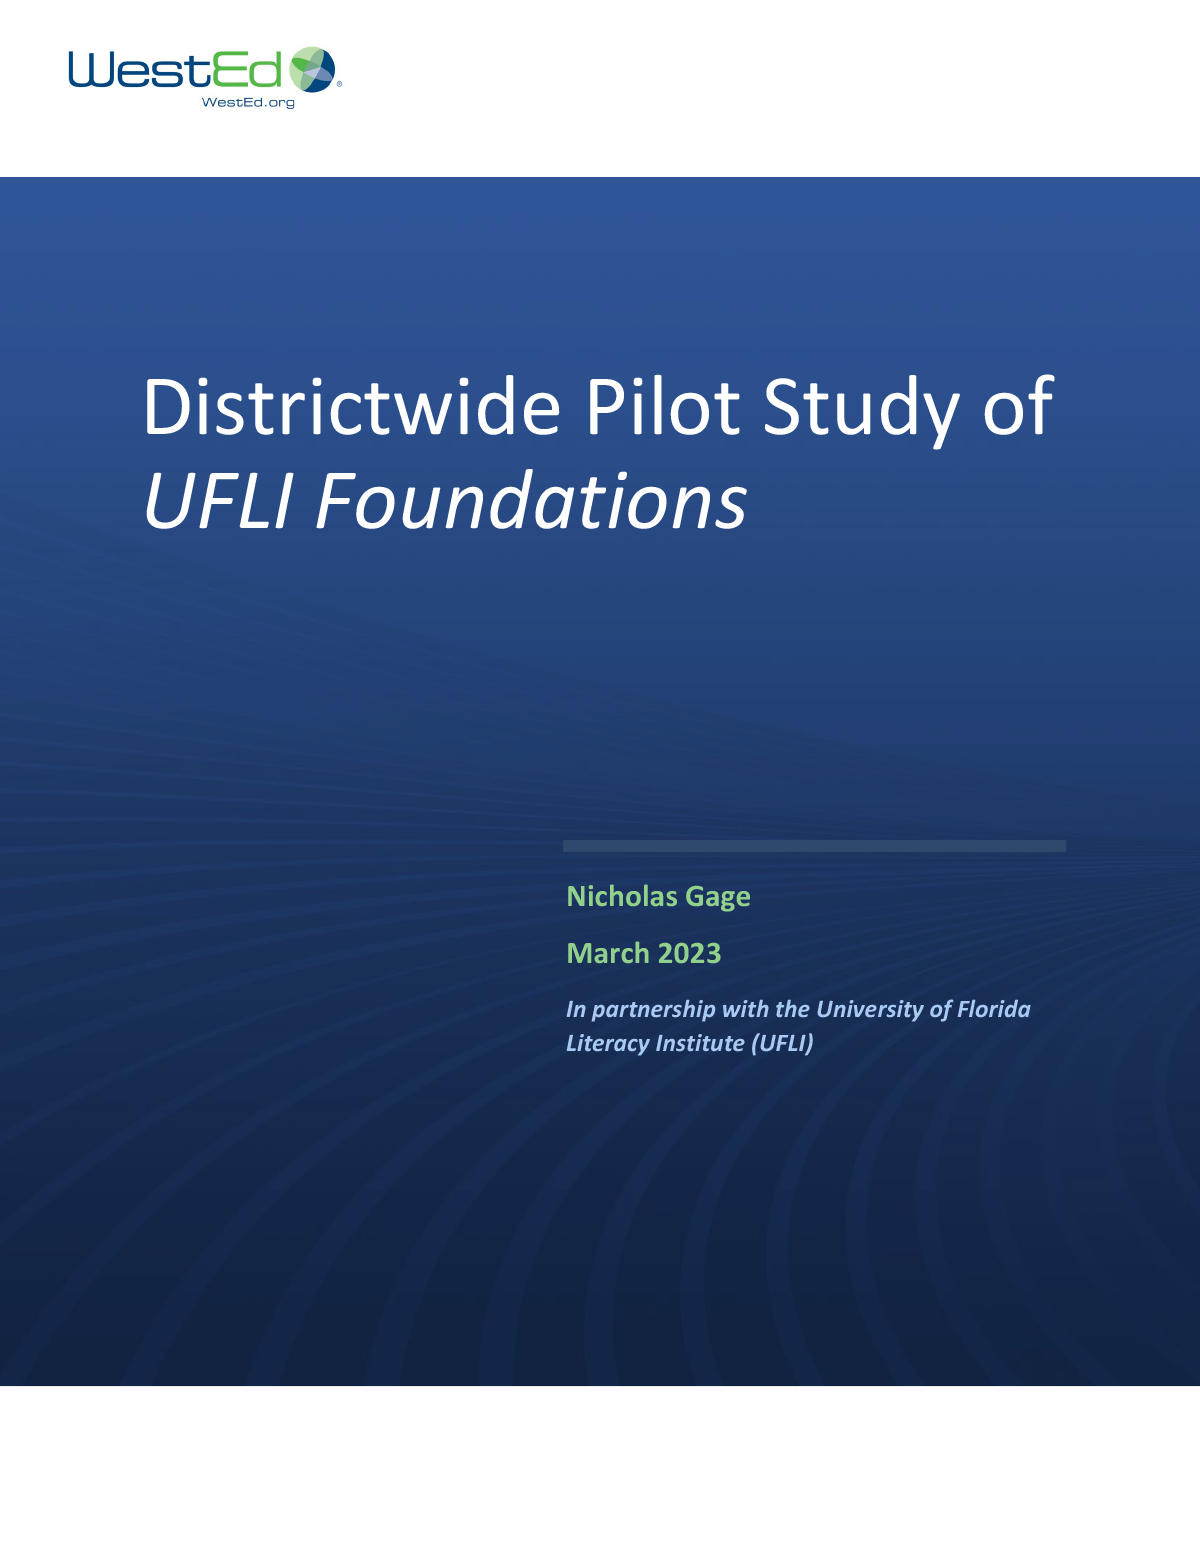 Districtwide Pilot Study of UFLI Foundations